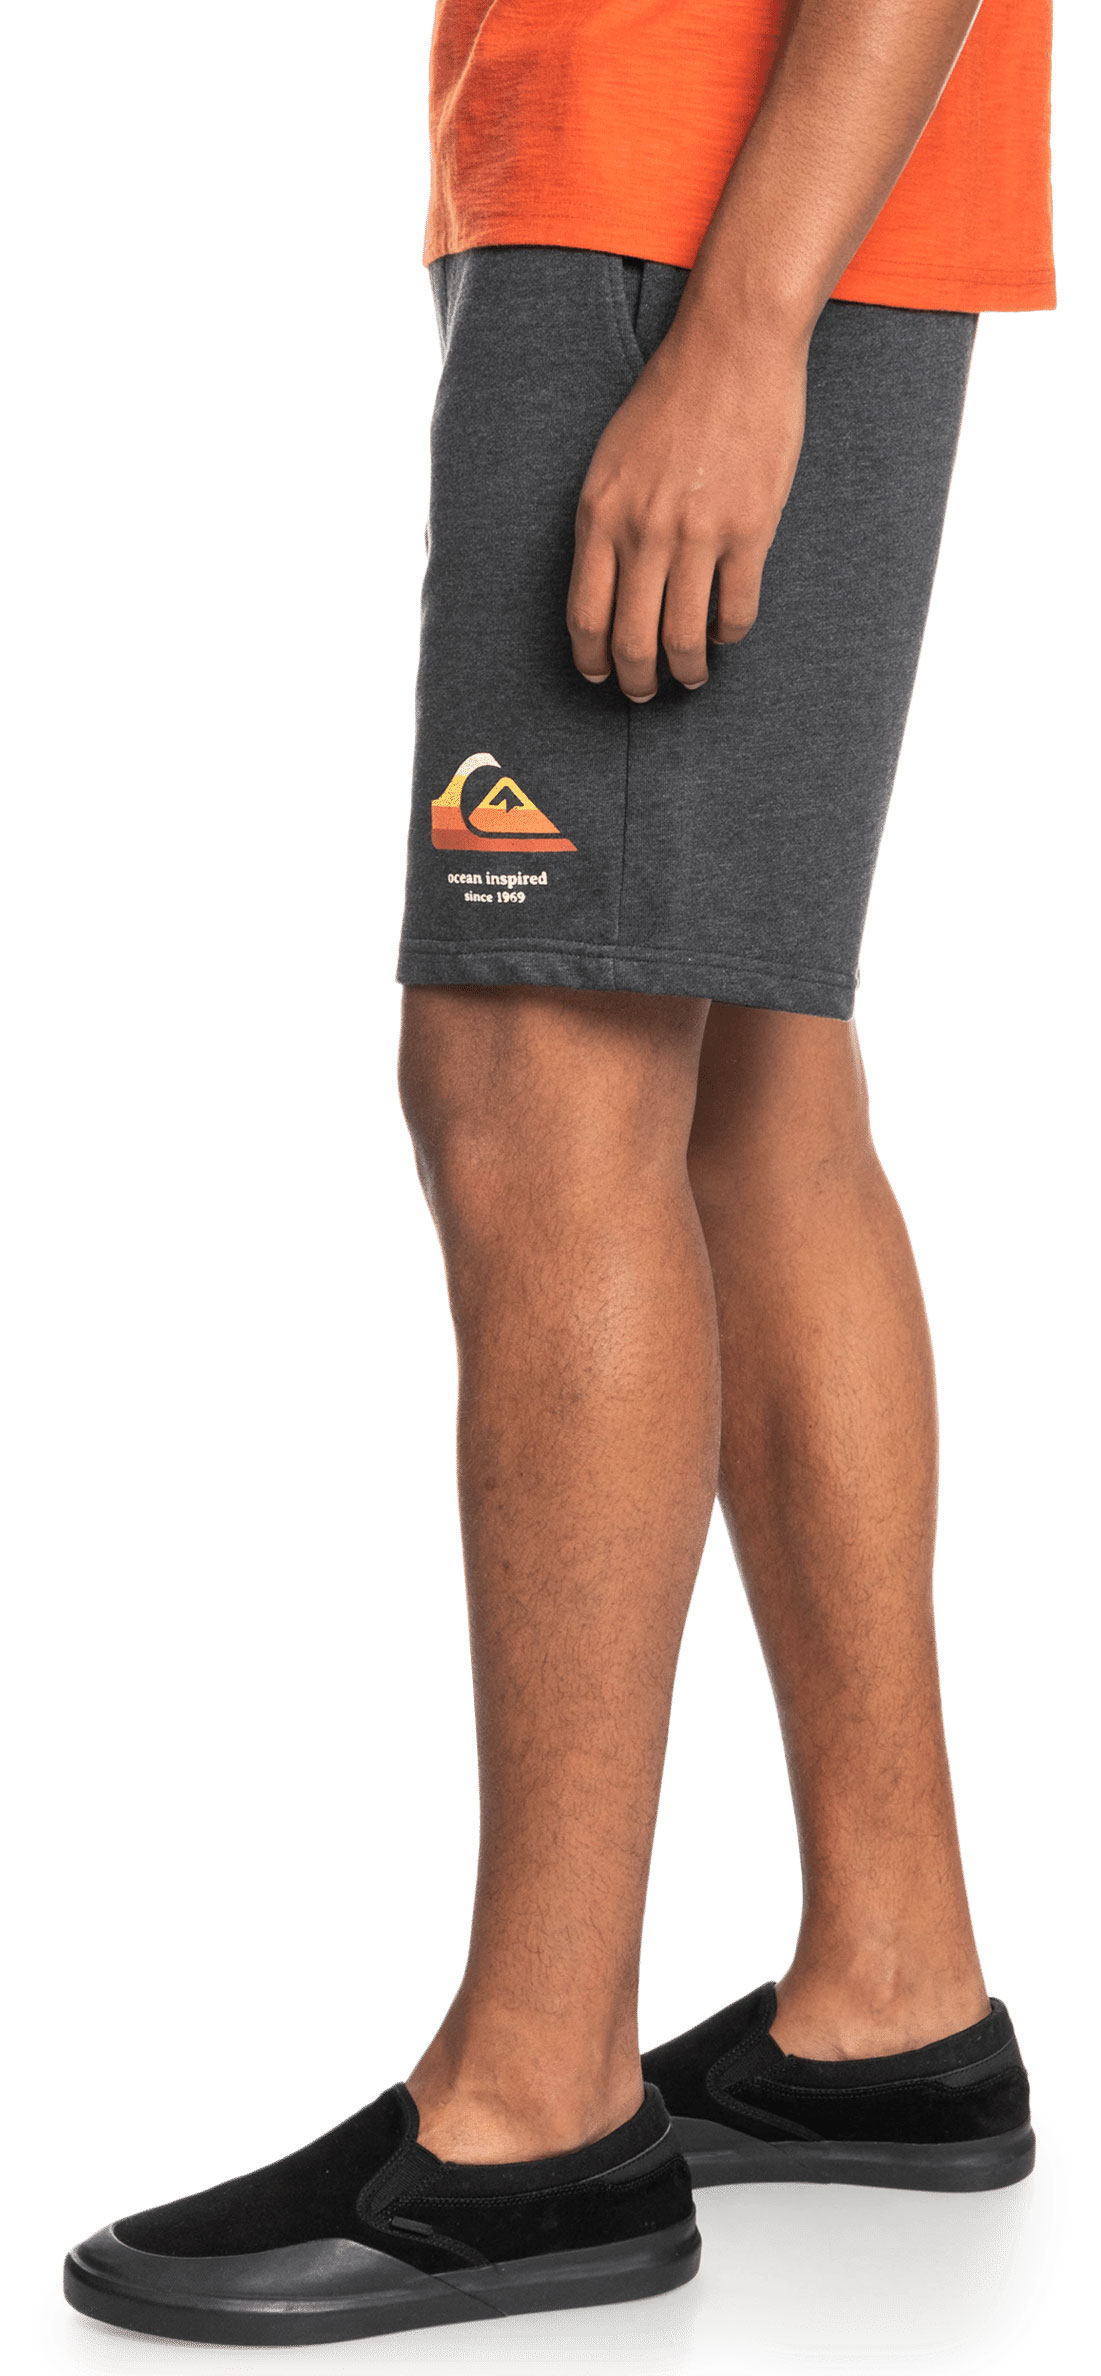 Men’s sweat shorts